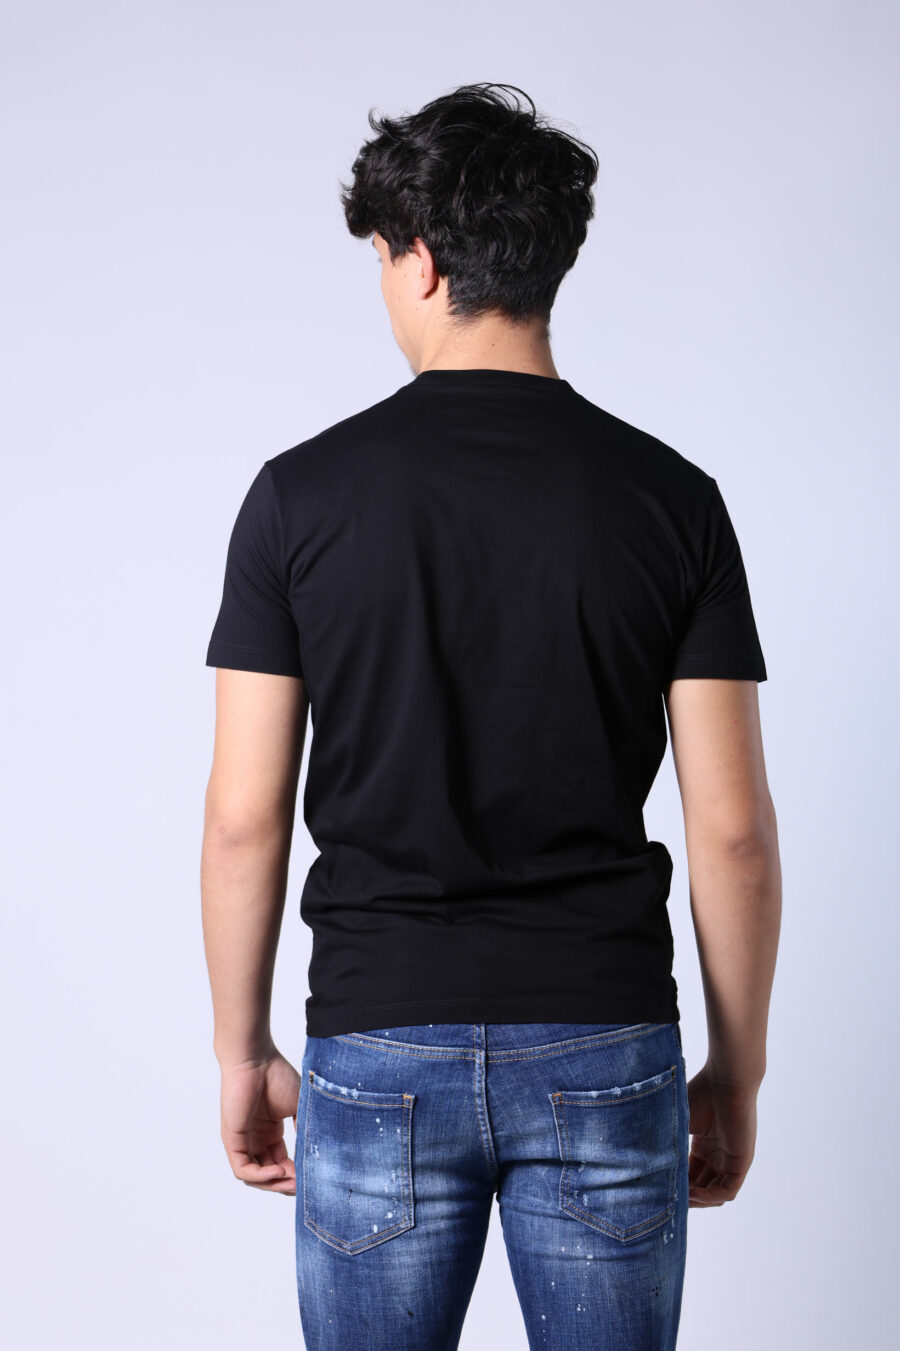 Schwarzes T-Shirt mit türkisem und fuchsiafarbenem "icon pixeled" Maxilogo - Untitled Catalog 05300